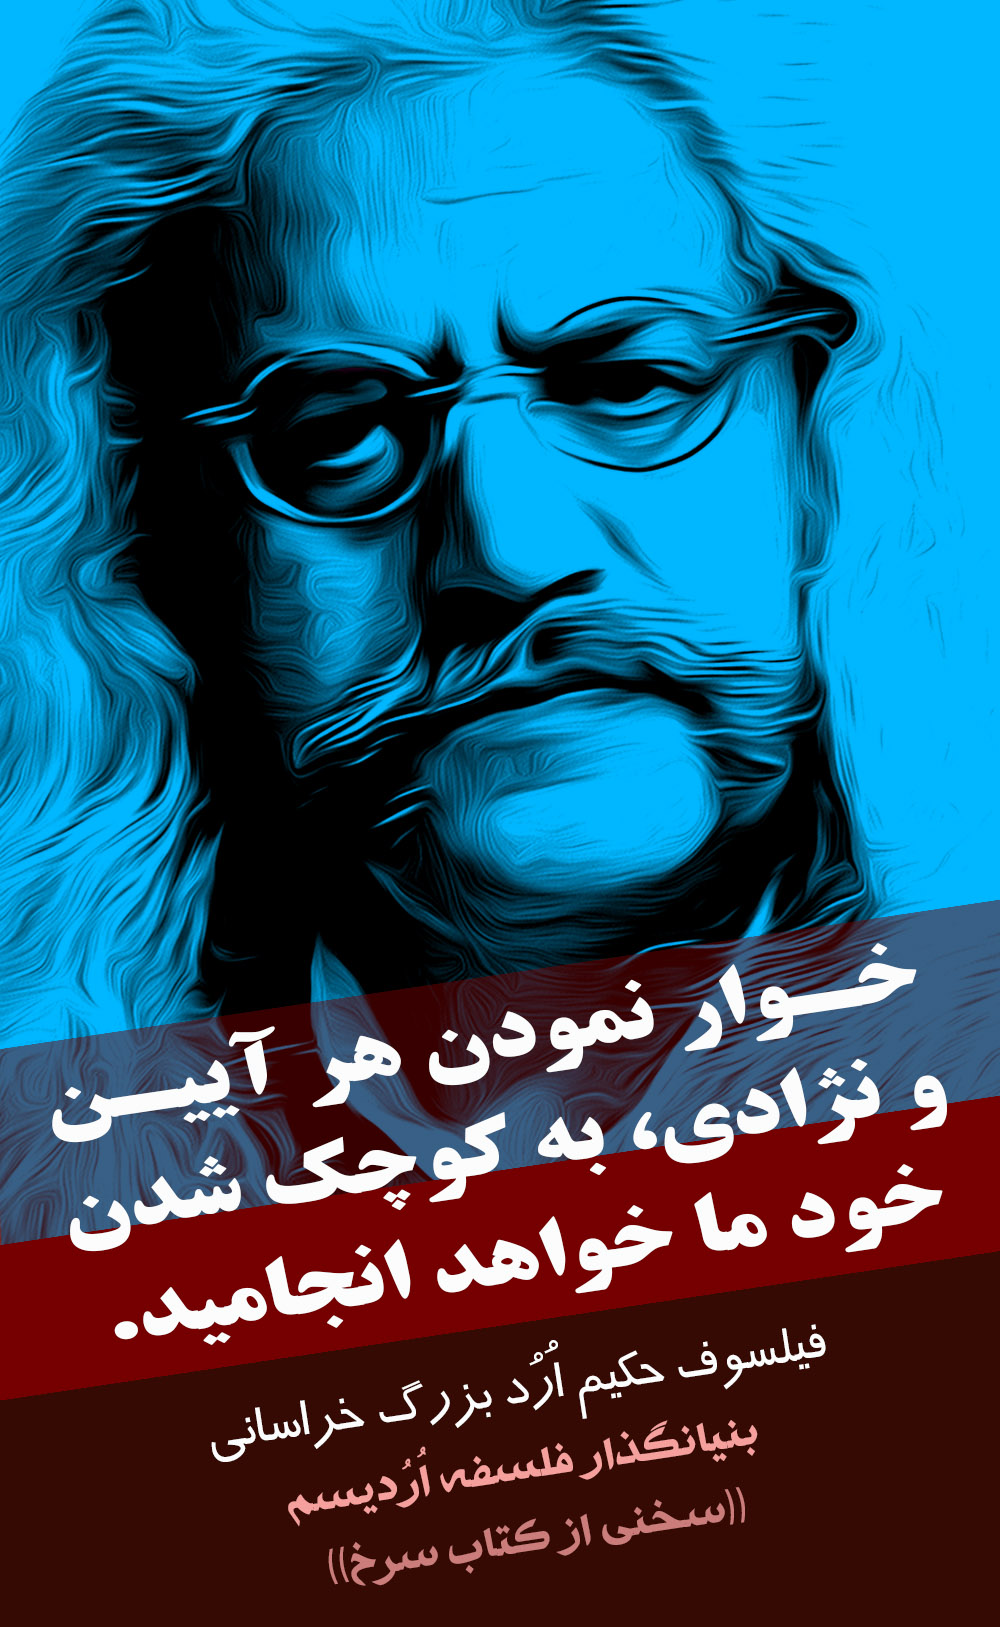  Inspirational Quotes About Life by Philosopher Hakim Orod Bozorg Khorasani  3110